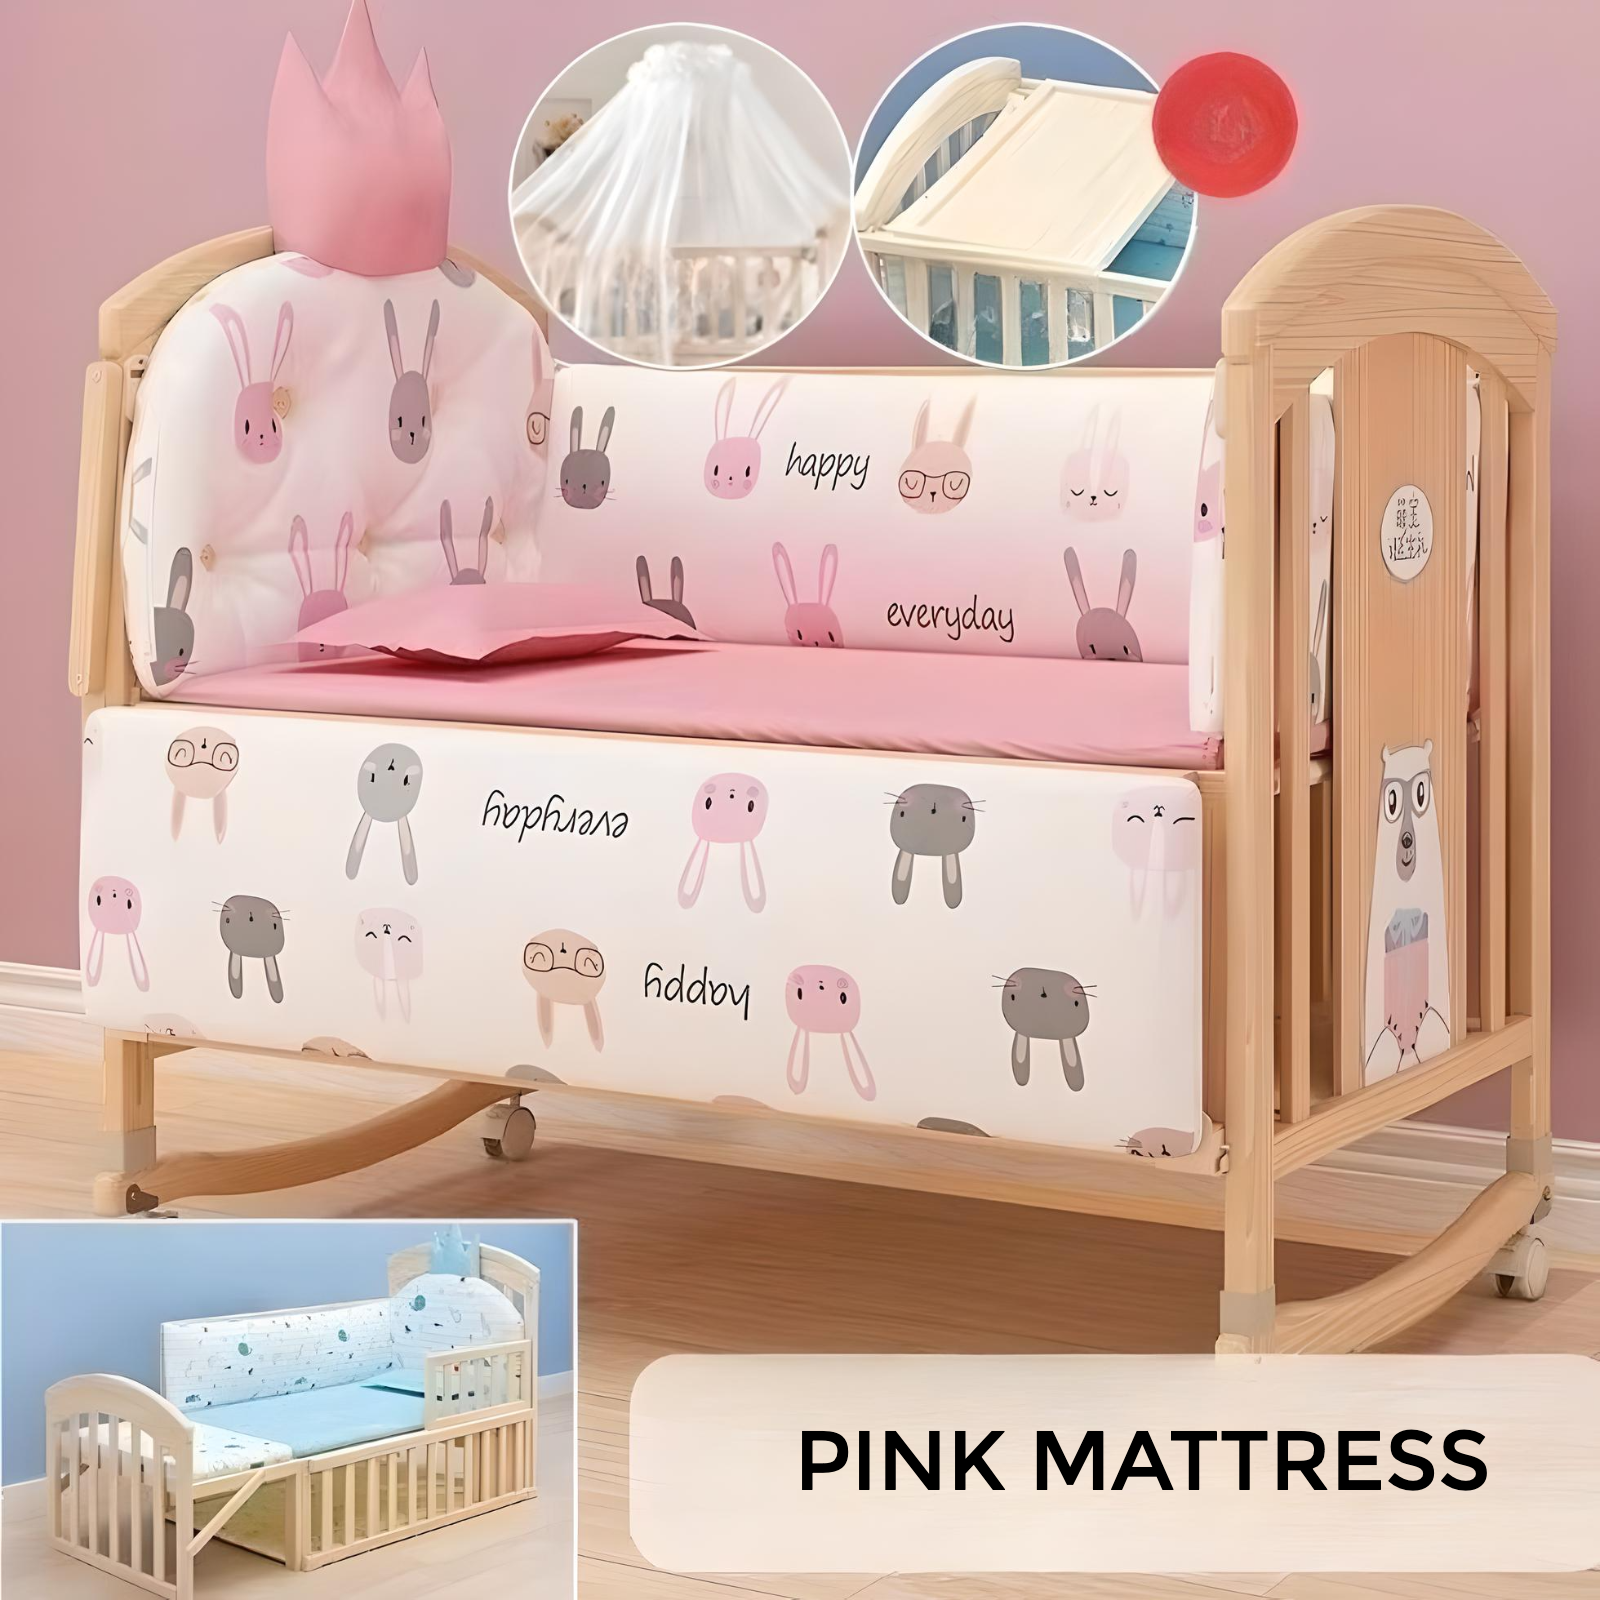 Minikin Multifunctional Extendable Wooden Crib I Mattress & Bumper Beds I NB - 6 Years